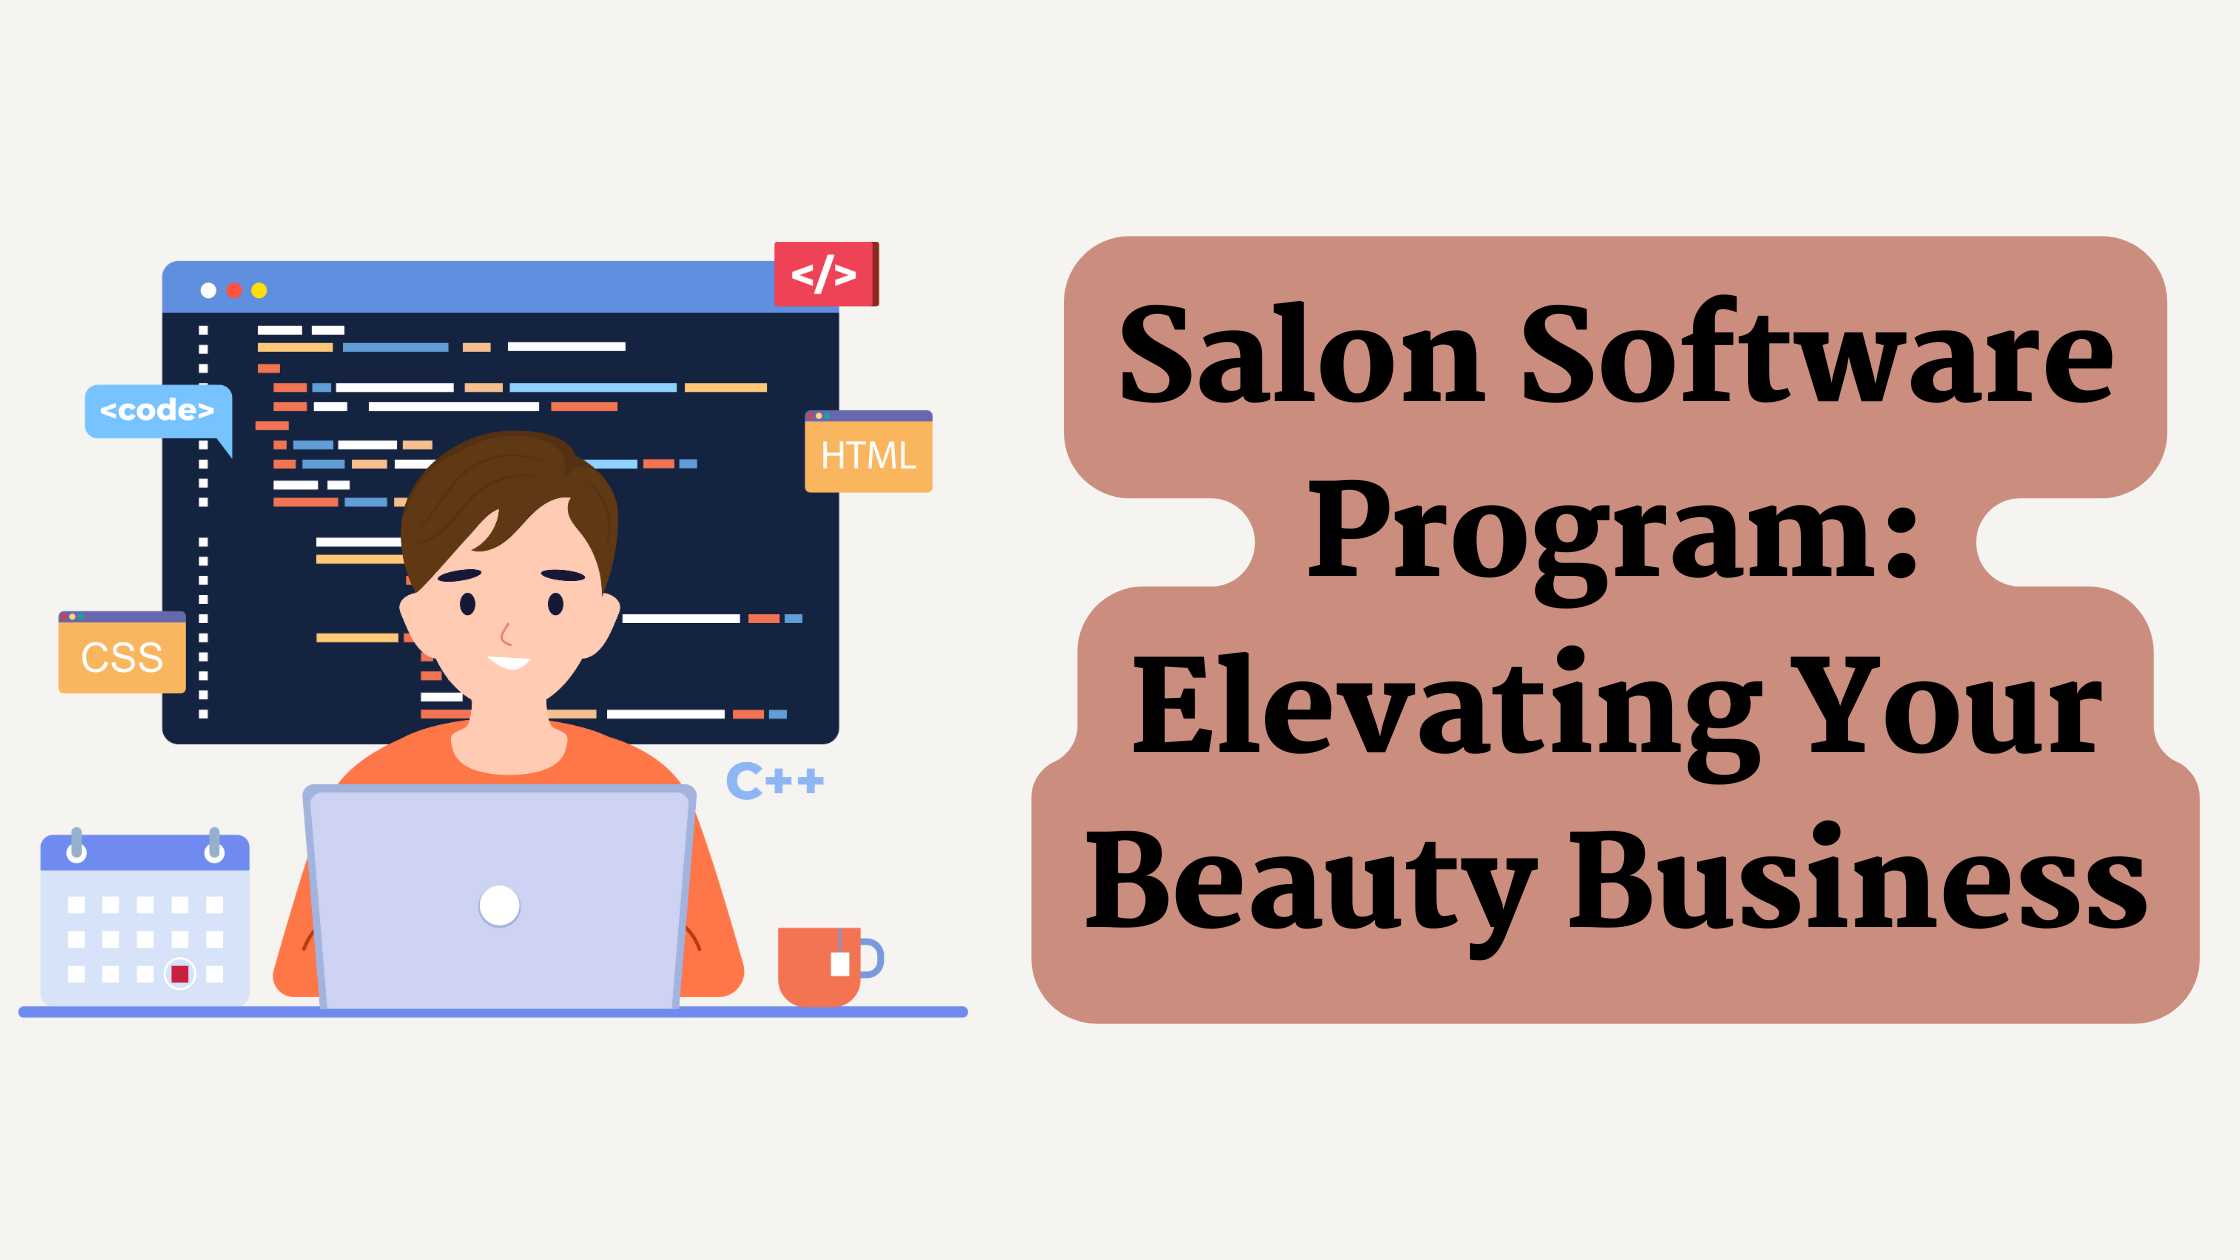 Salon Software Program: Elevating Your Beauty Business